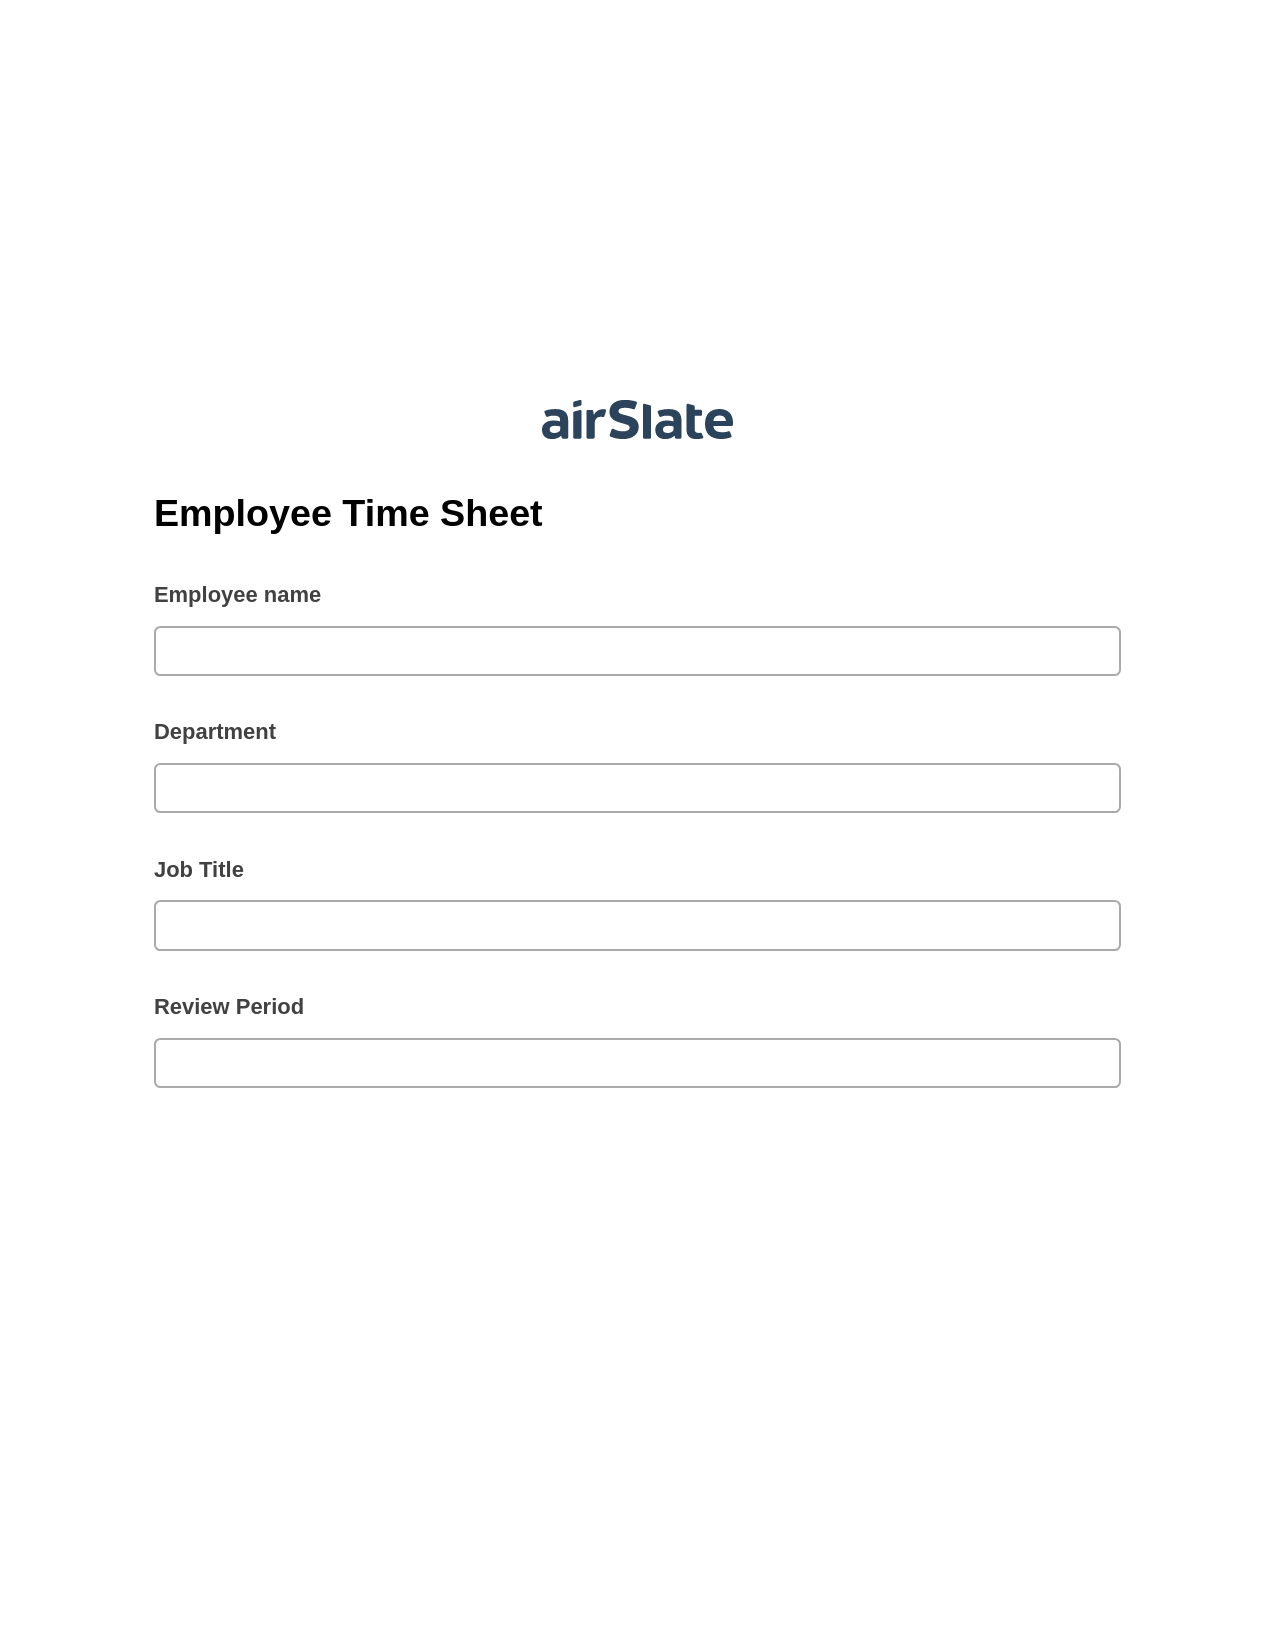 Employee Time Sheet Pre-fill Dropdowns from Smartsheet Bot, Update Audit Trail Bot, Export to Smartsheet